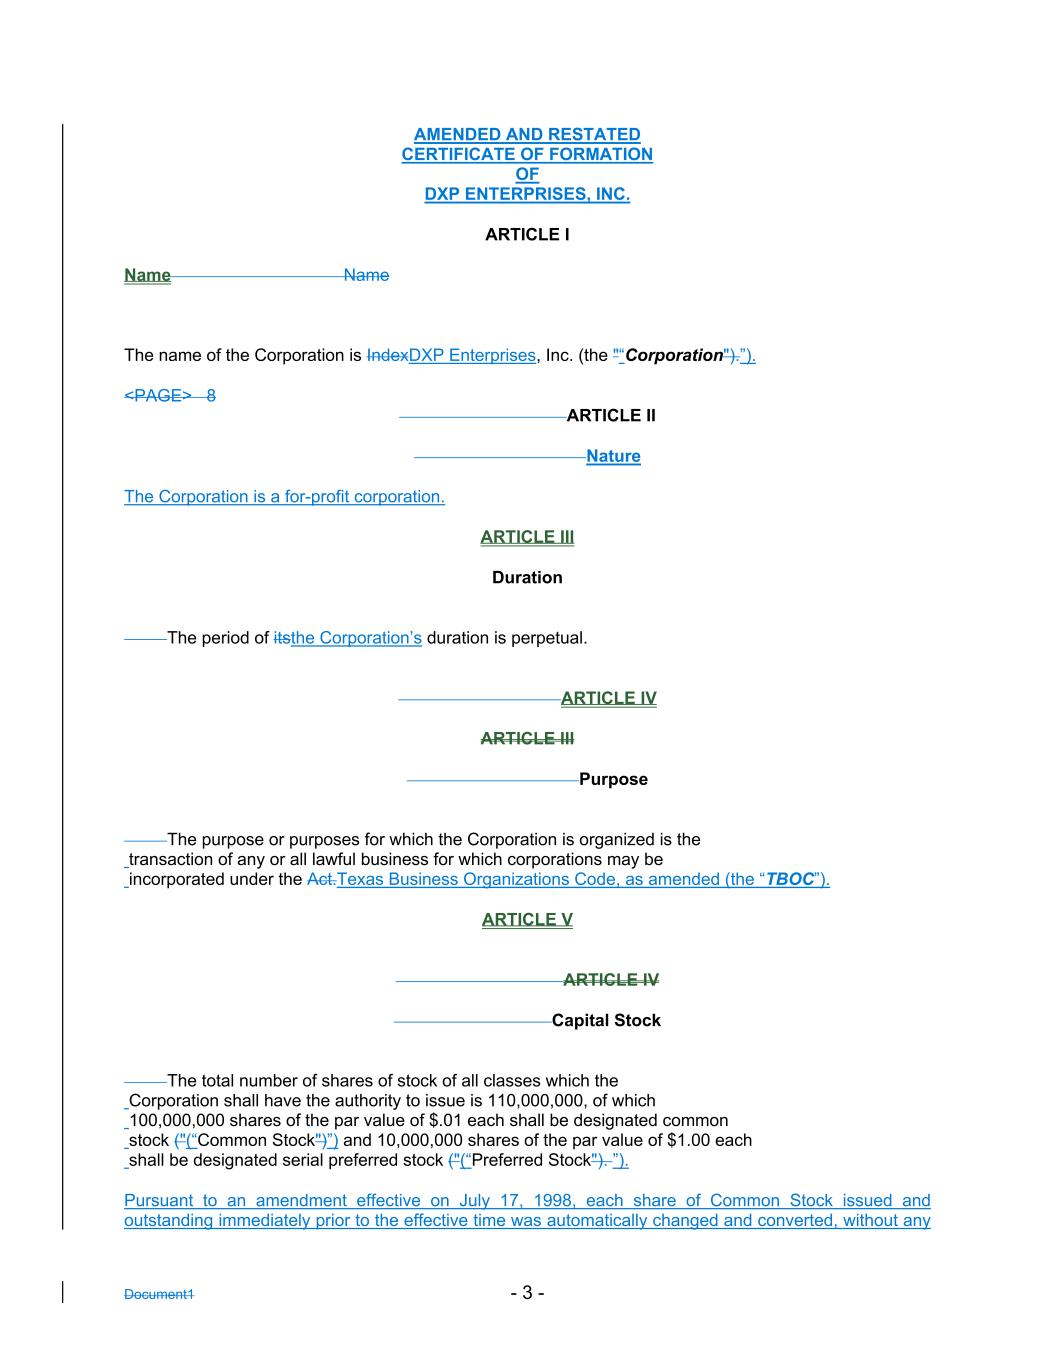 Microsoft Word - Cumulative Redline DXP Certificate of Formation.docx003.jpg